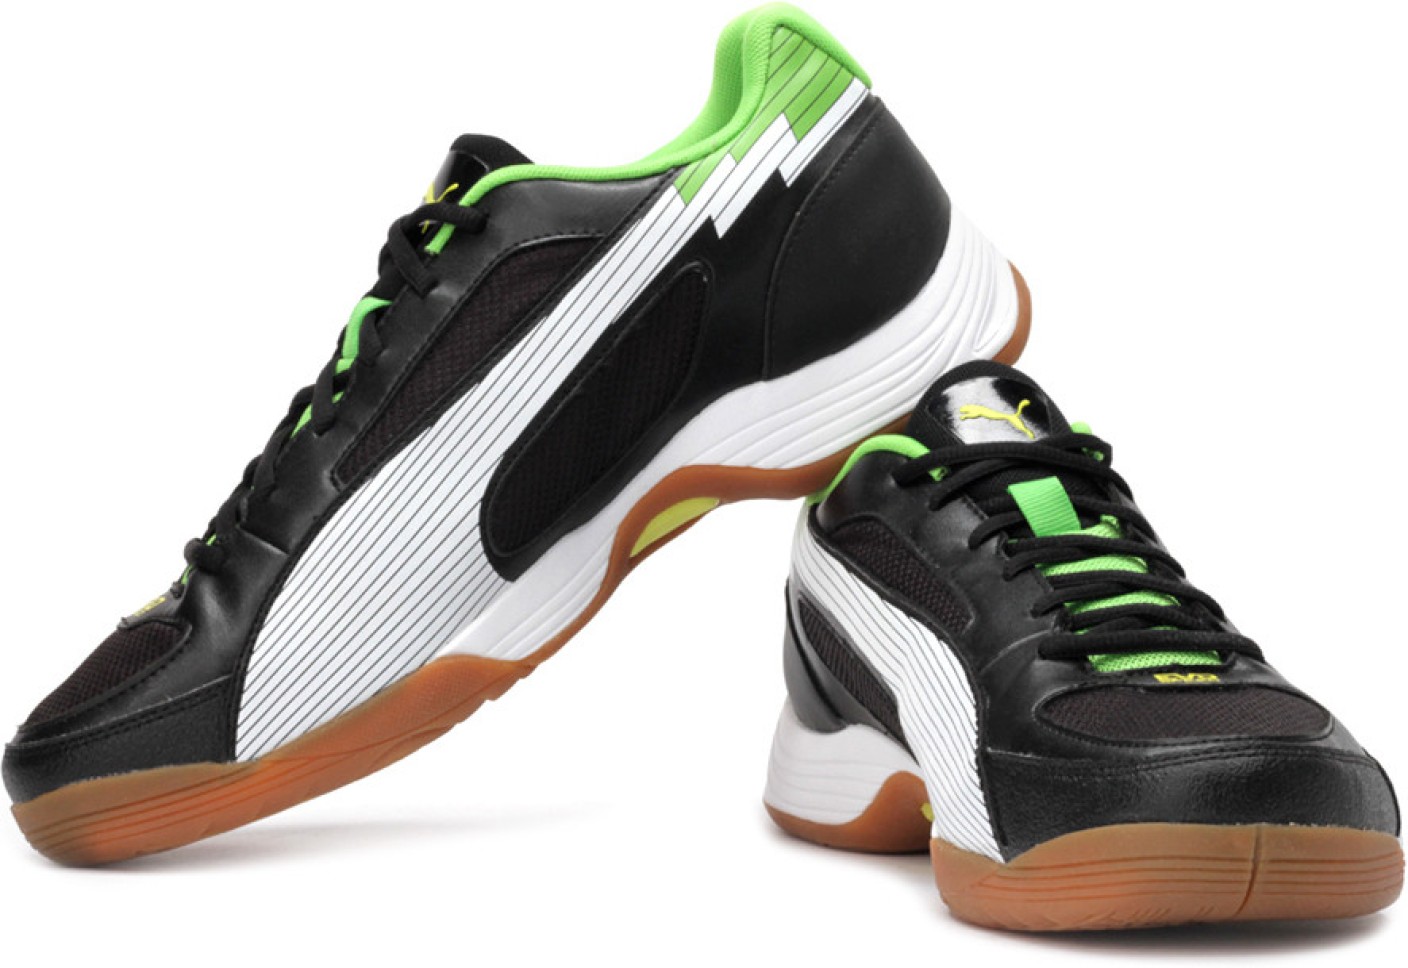 Puma Football Shoes / Puma Green Football Shoes - Buy Puma Green ...